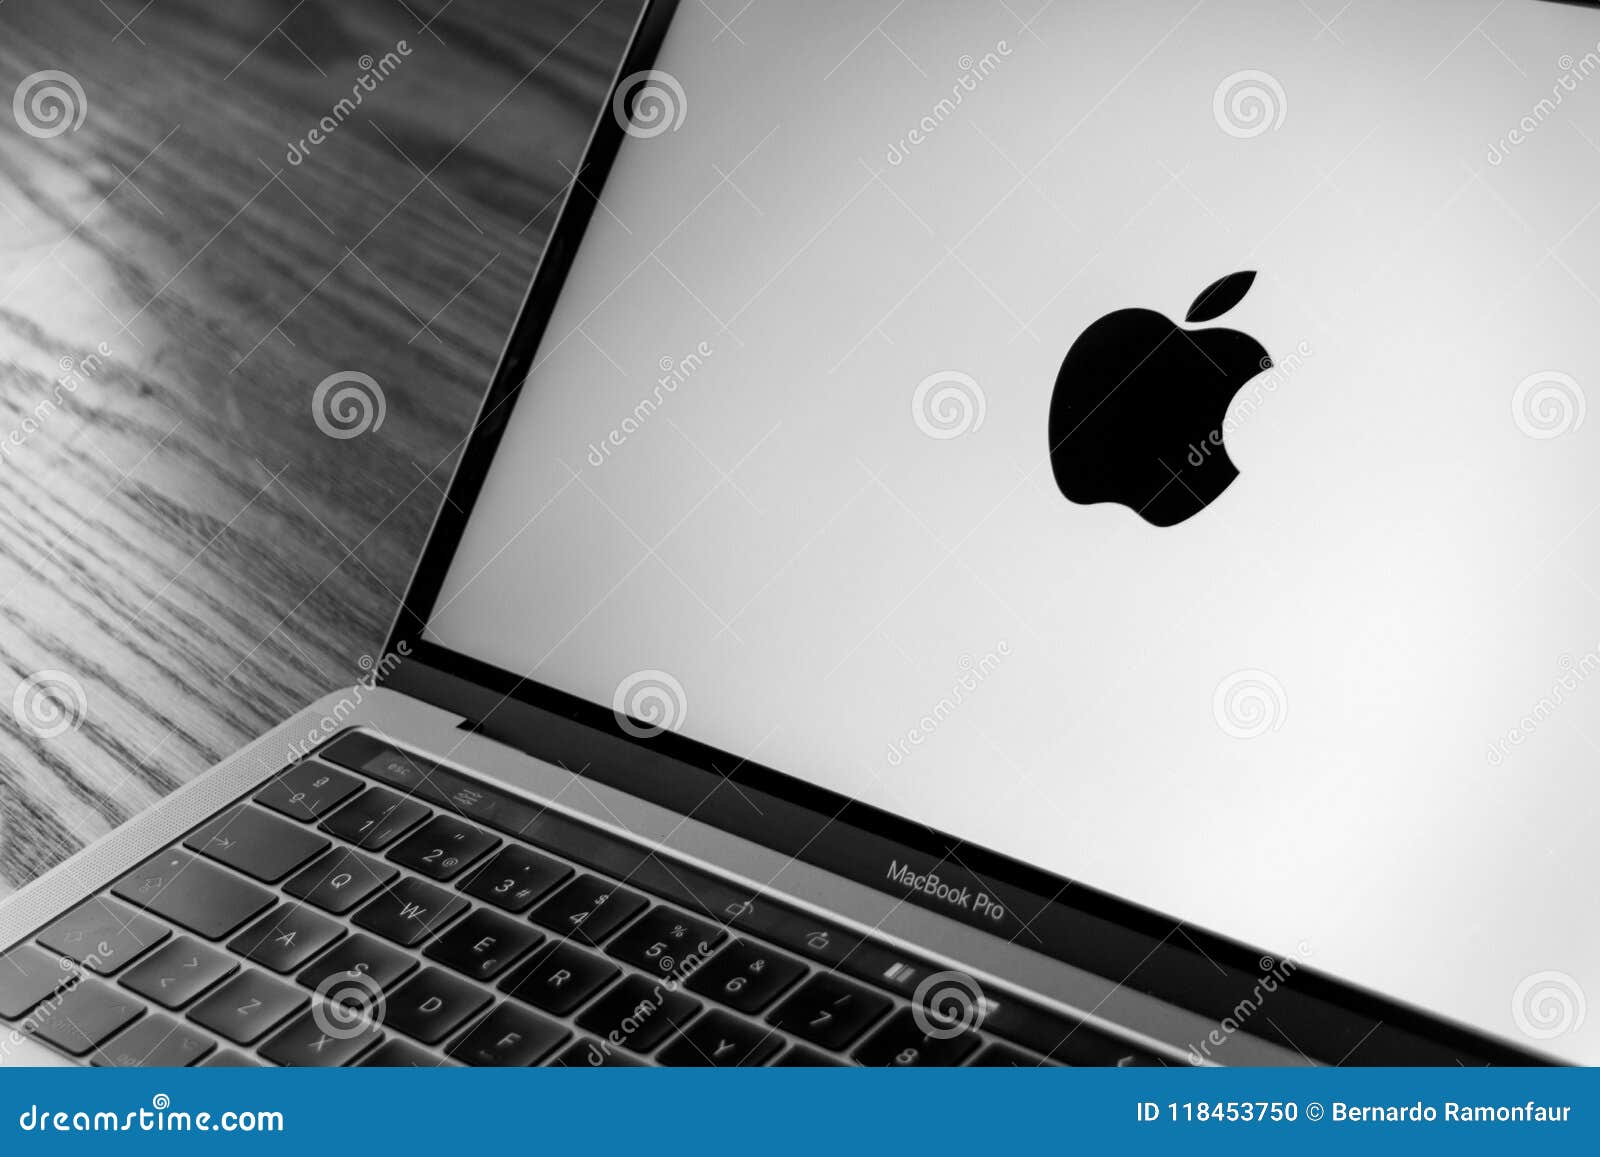 Apple Logo on Laptop Screen Editorial Image - Image of screen, keyboard ...